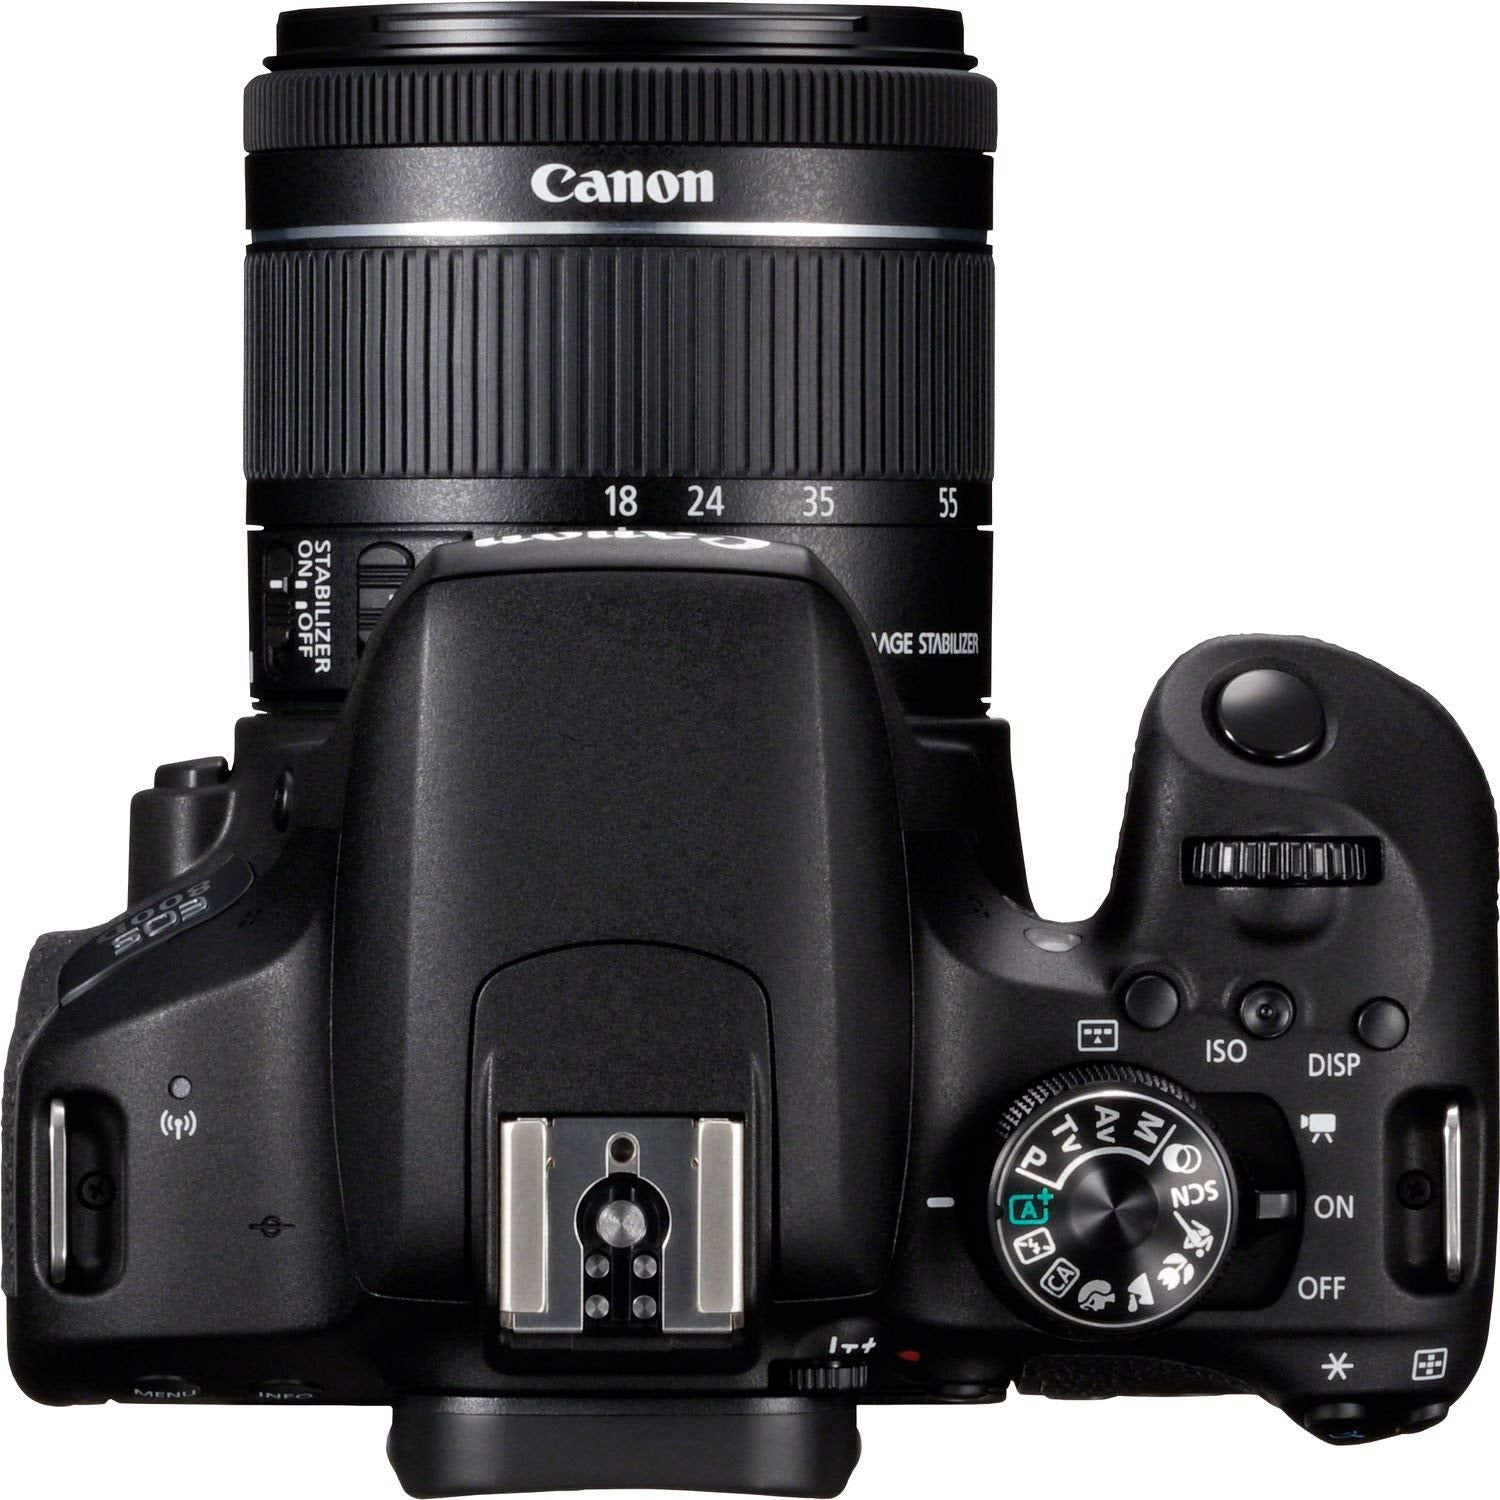 Canon EOS 800D (Rebel T7i) 18-55mm IS STM and EF 73-300mm Lens Bundle �SanDisk 32gb + Filters + MORE - International